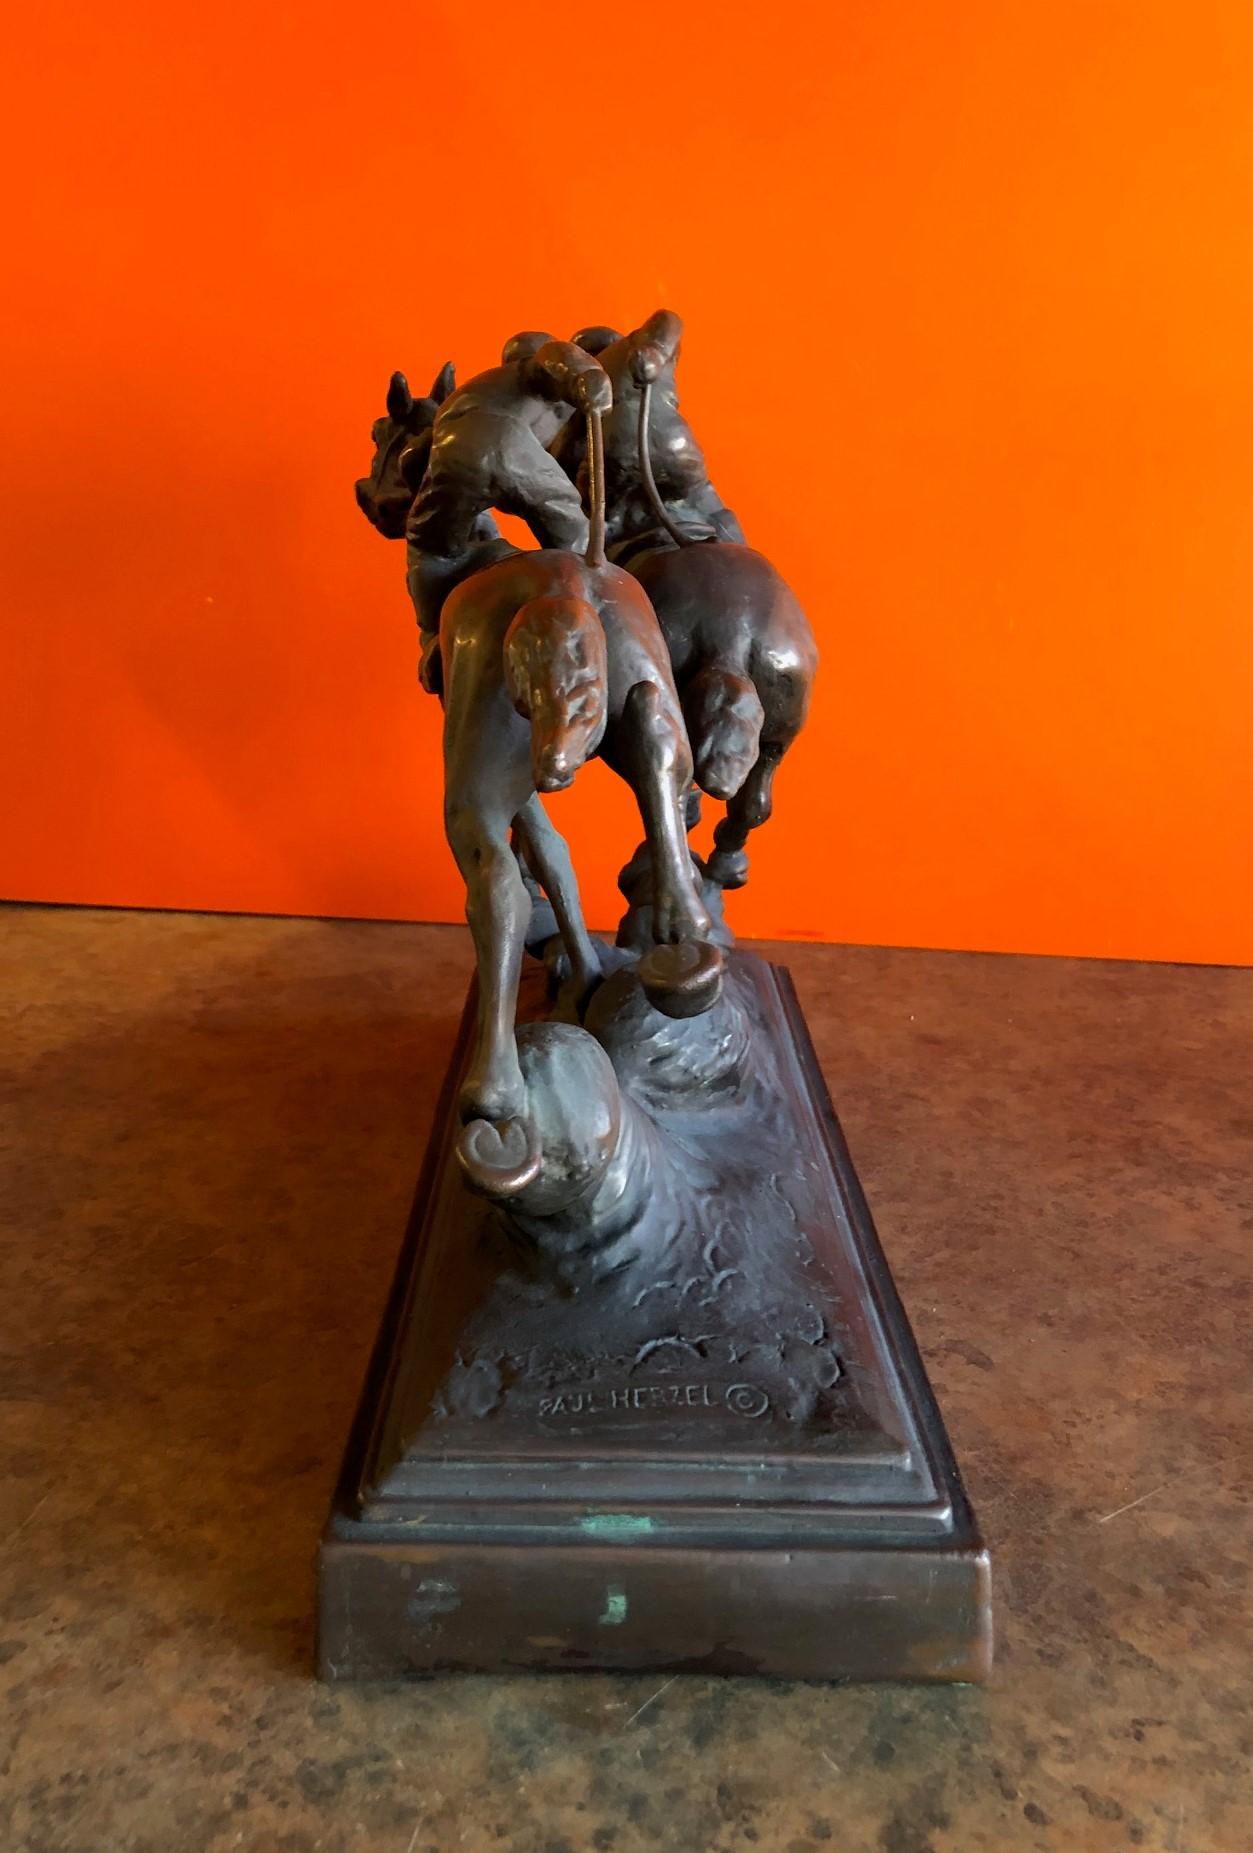 20th Century Thoroughbred Horses Racing Bronze Sculpture by Paul Herzel